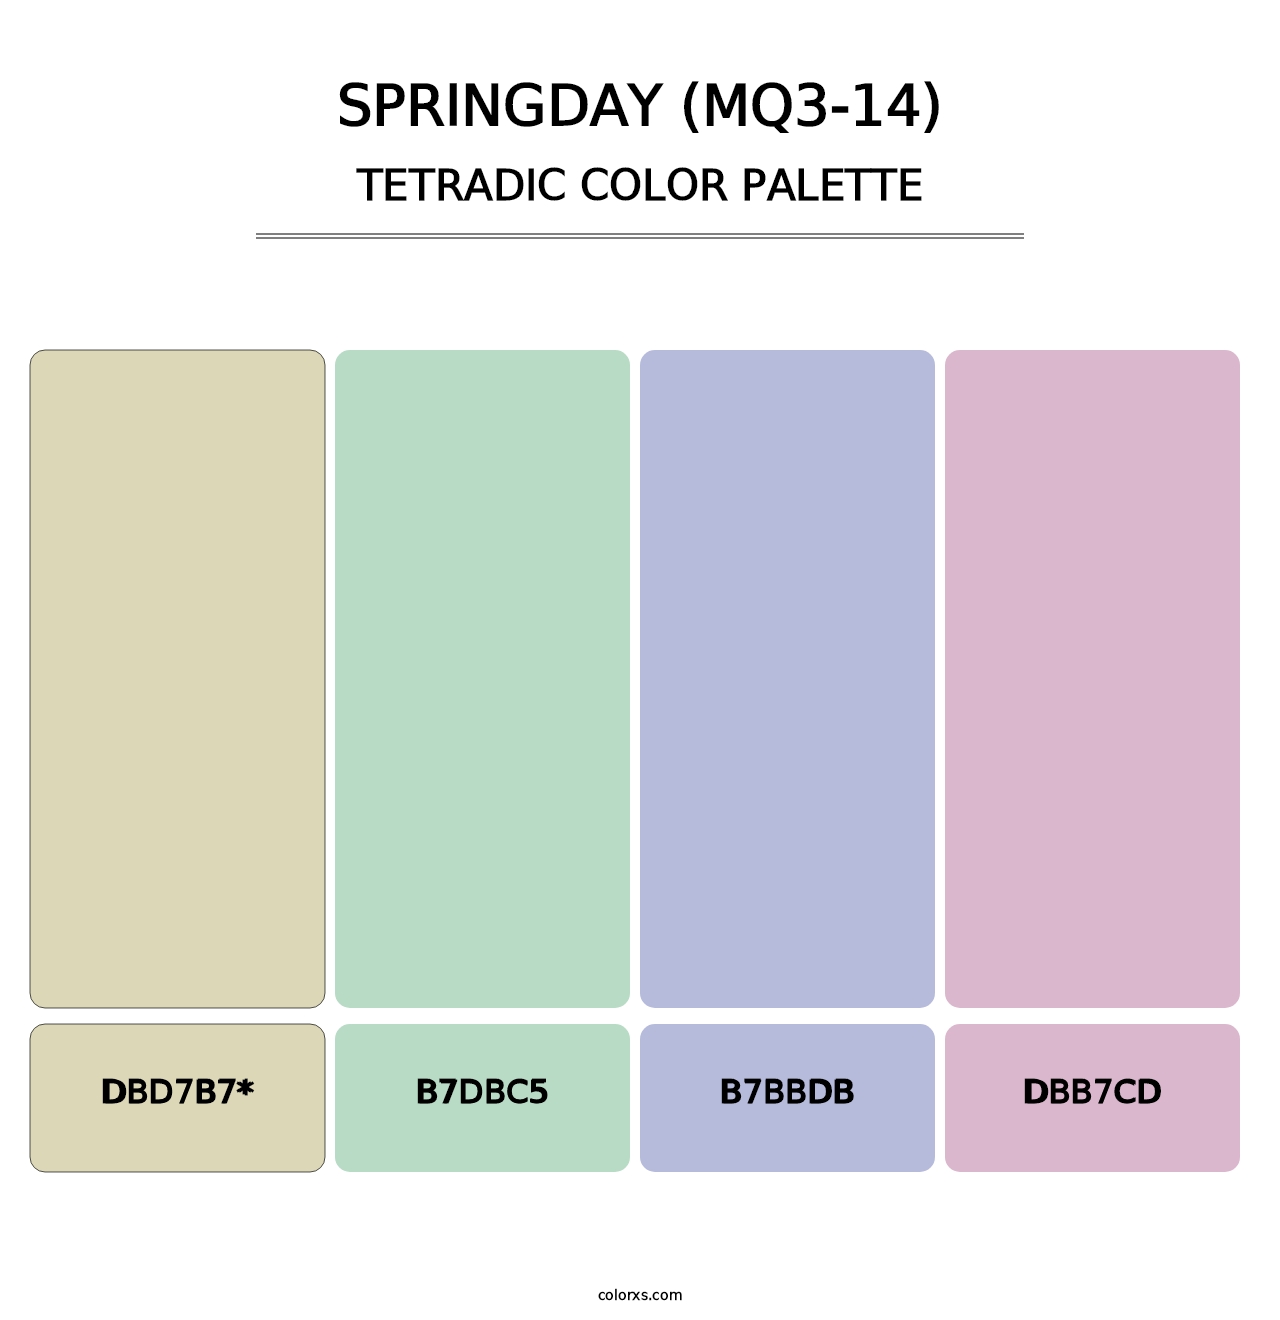 Springday (MQ3-14) - Tetradic Color Palette